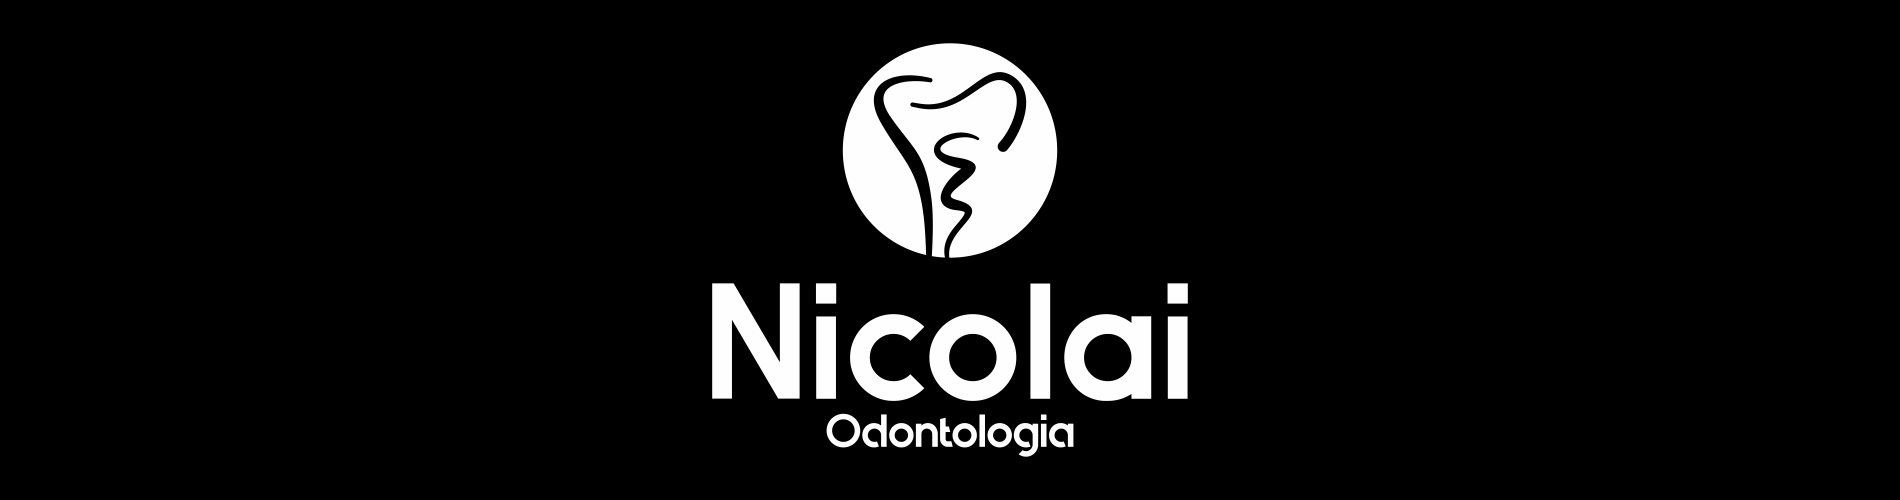 Nicolai Odontologia